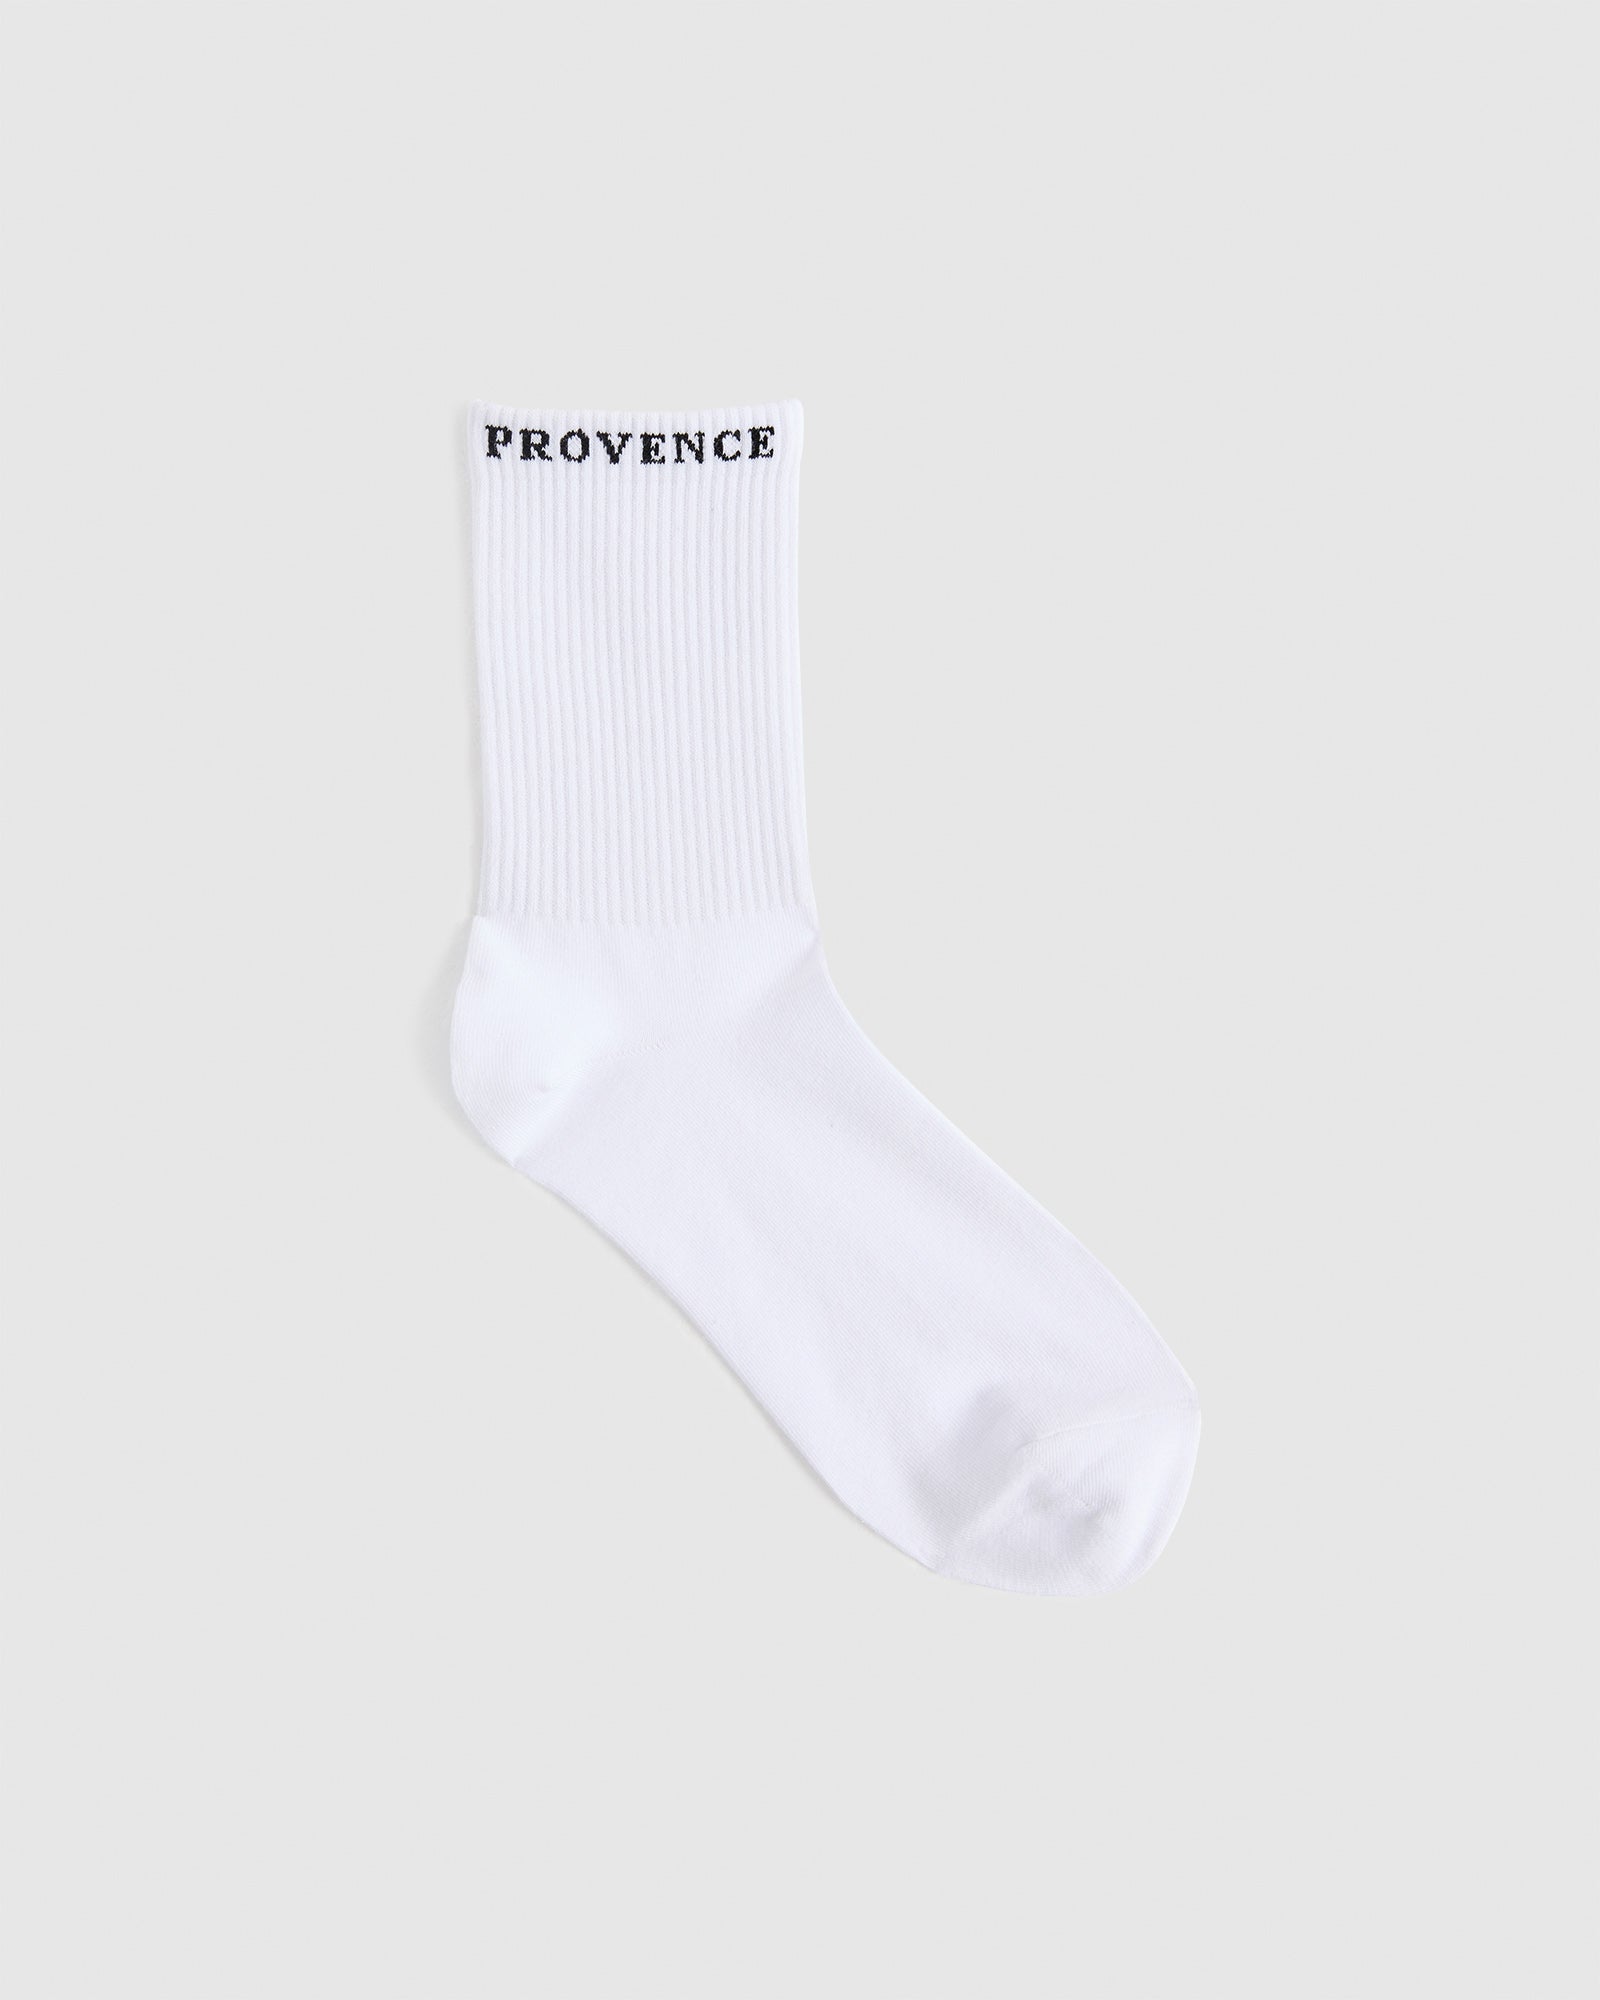 Provence Sock Unisex